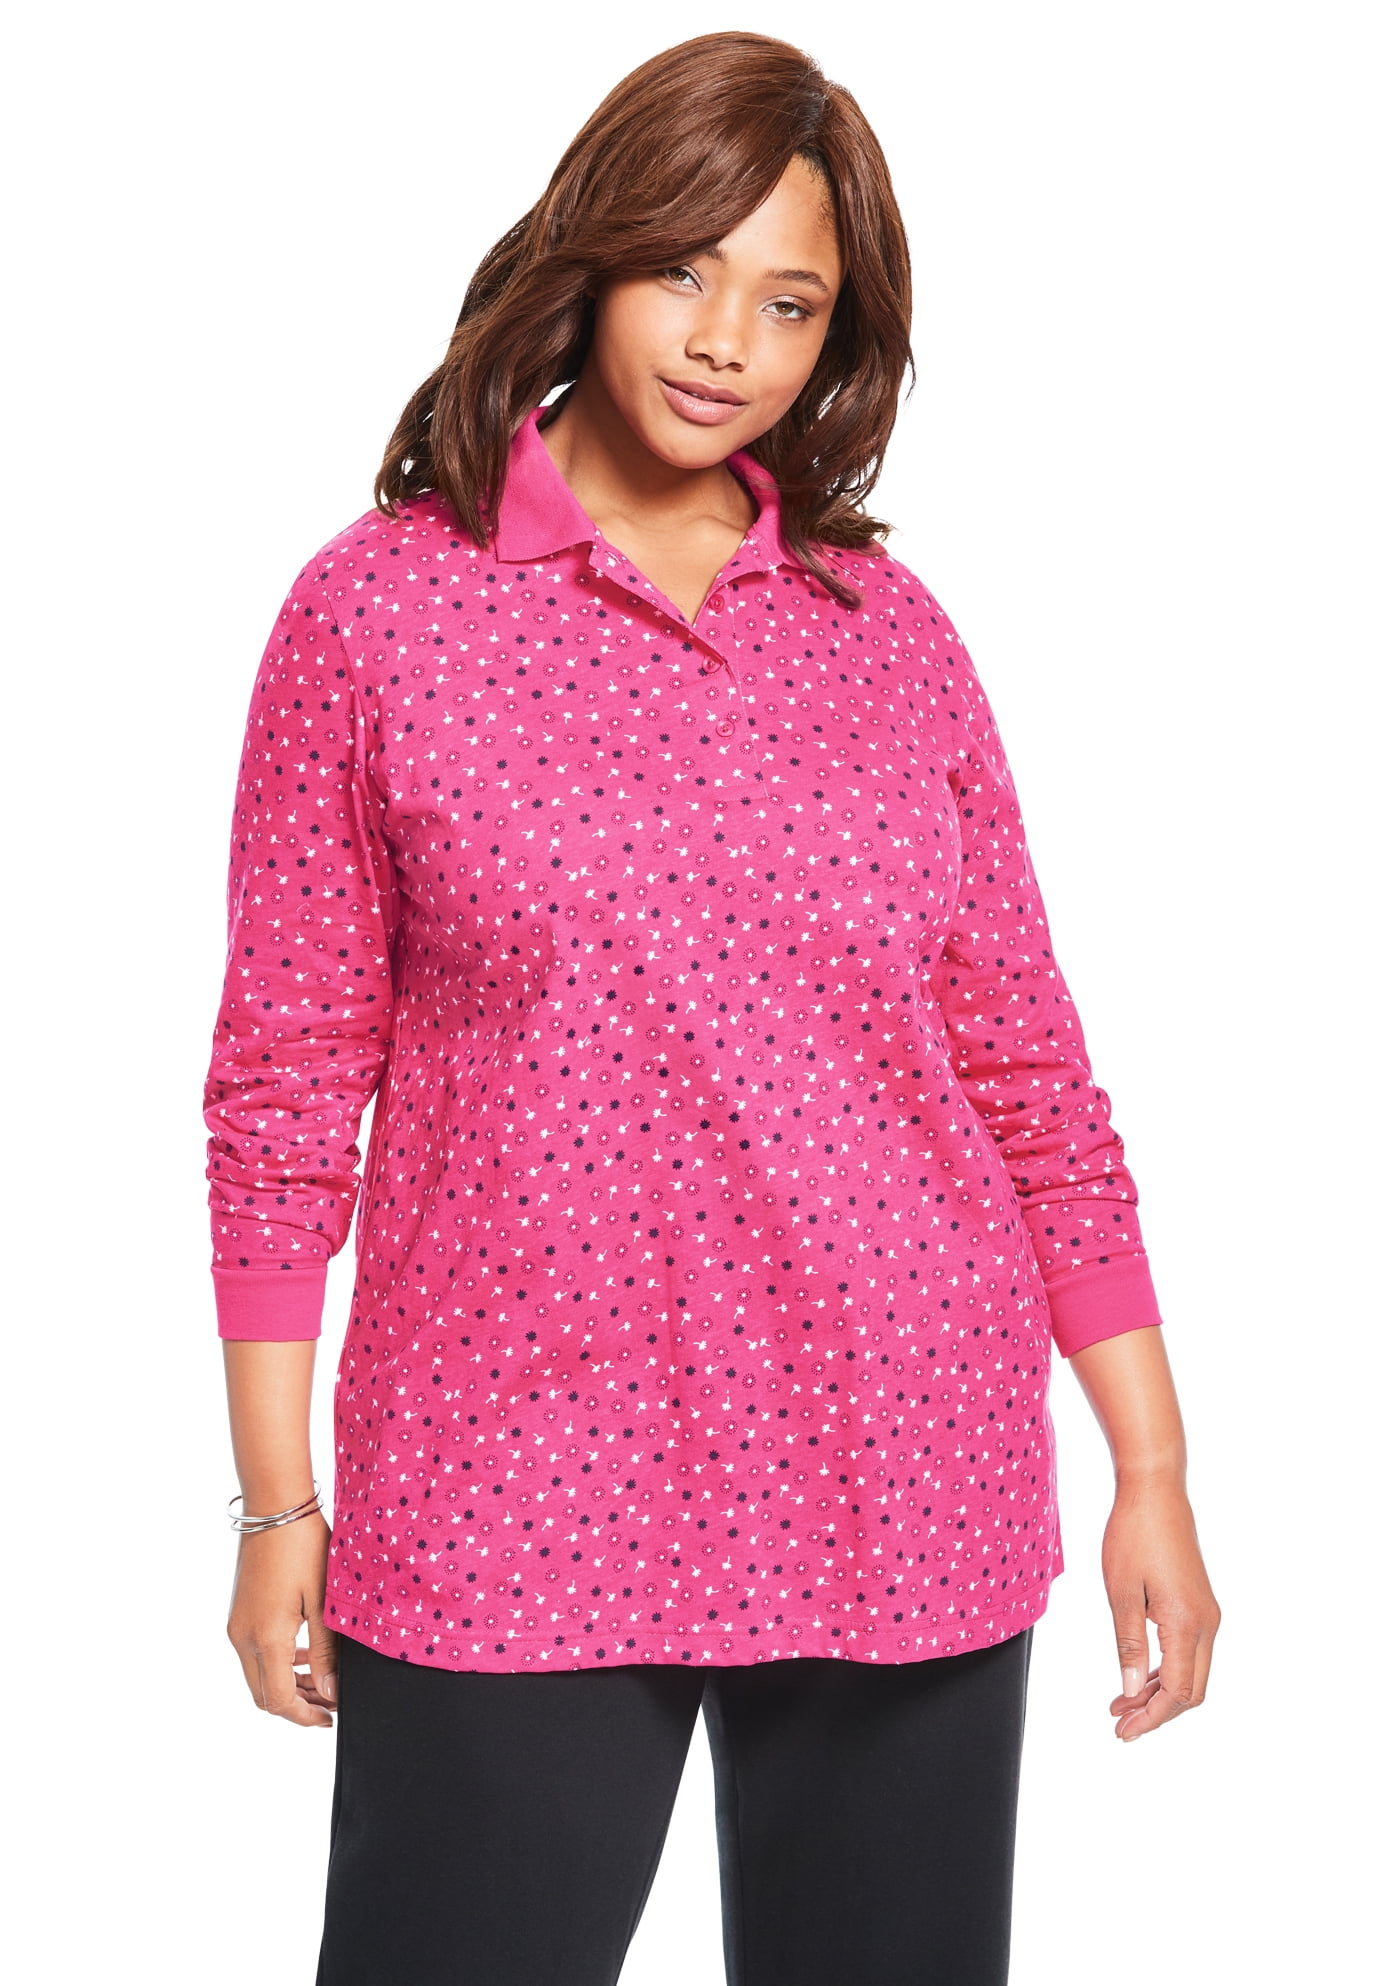 Millenium Women Plus Size 1x 2x 3x Floral Yellow Pink  Tunic Top Blouse Shirt 